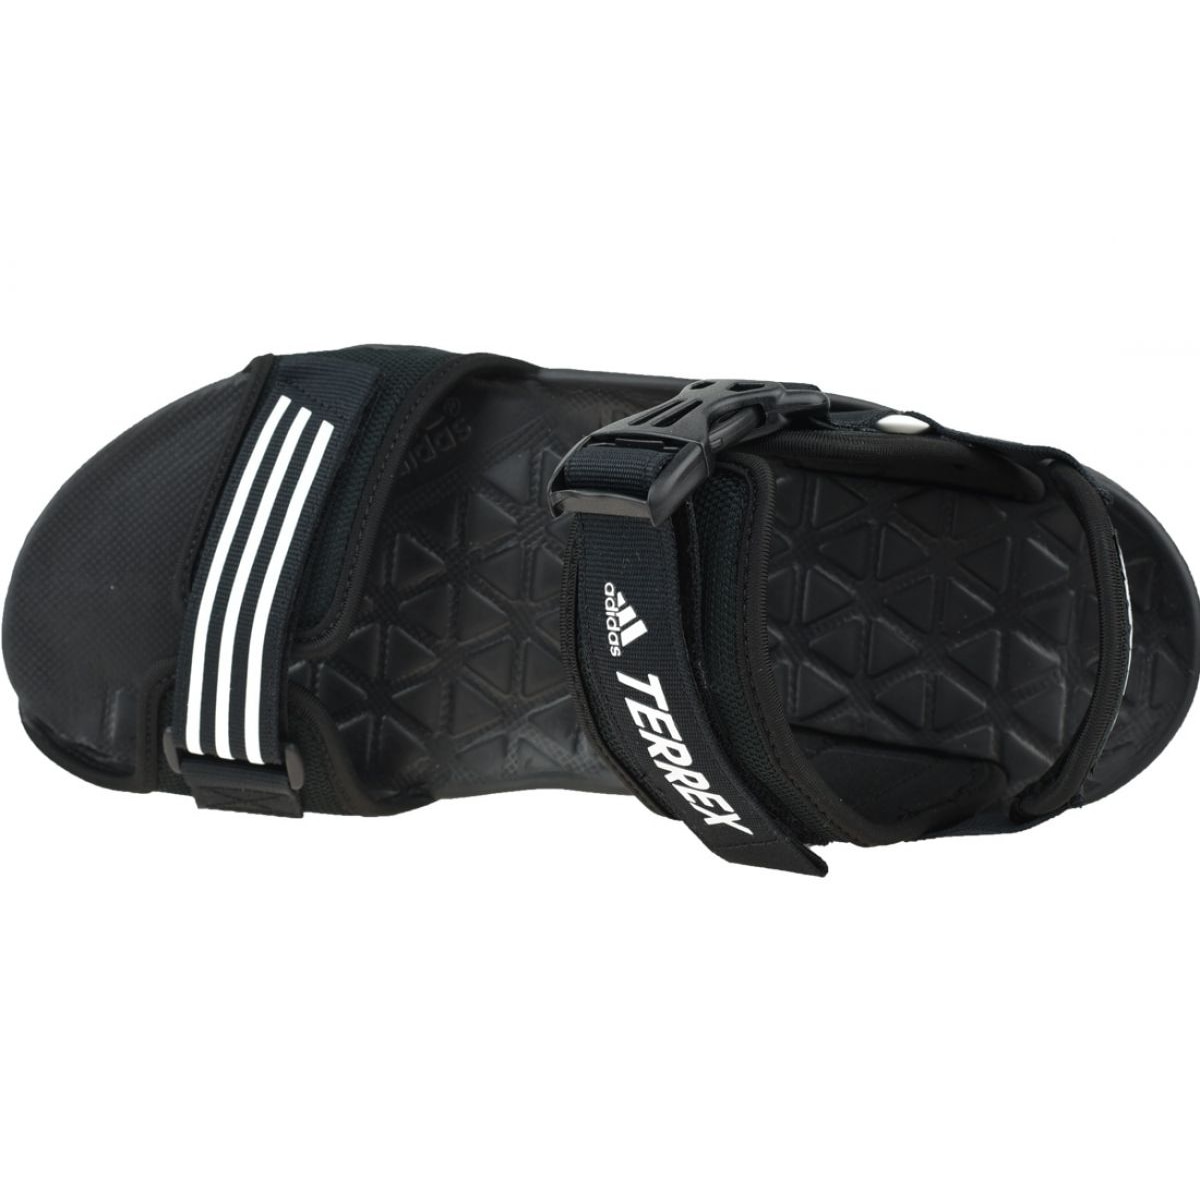 Dirty comfort curriculum Sandale pentru barbati Adidas, BM80610, Negru, 42 EU - eMAG.ro